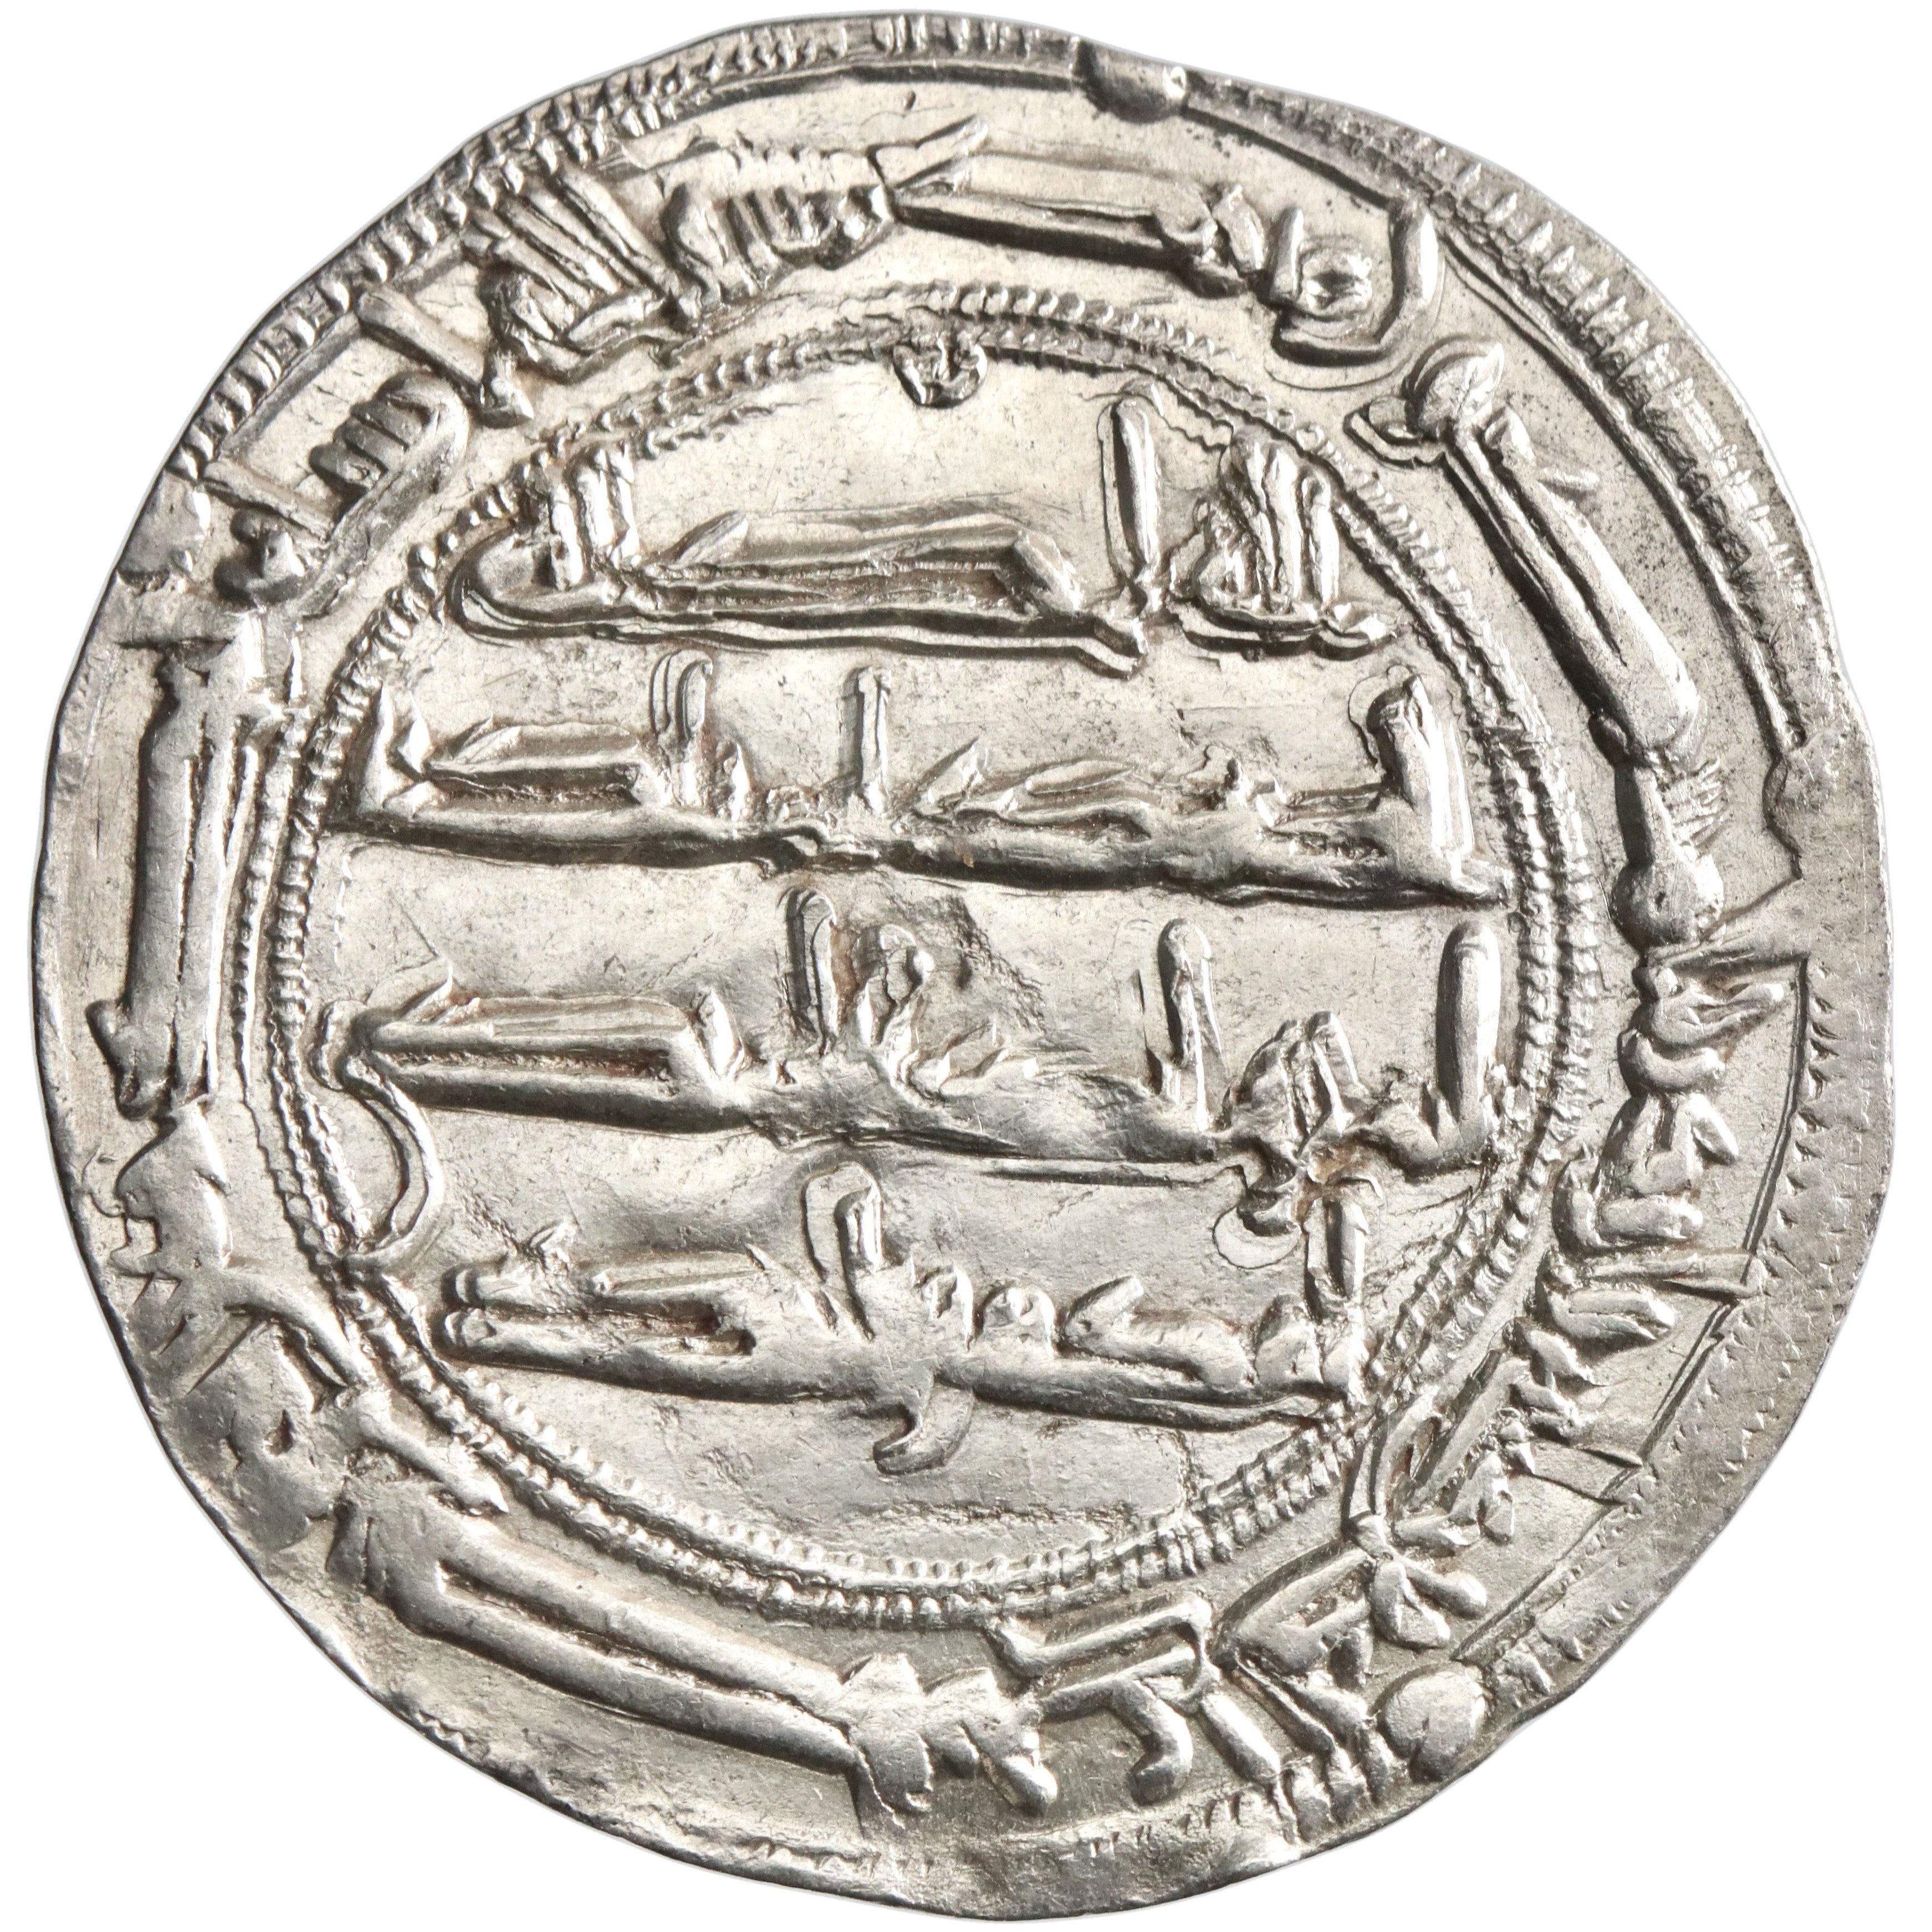 Umayyad of Spain, 'Abd al-Rahman I, silver dirham, al-Andalus (Spain) mint, AH 167